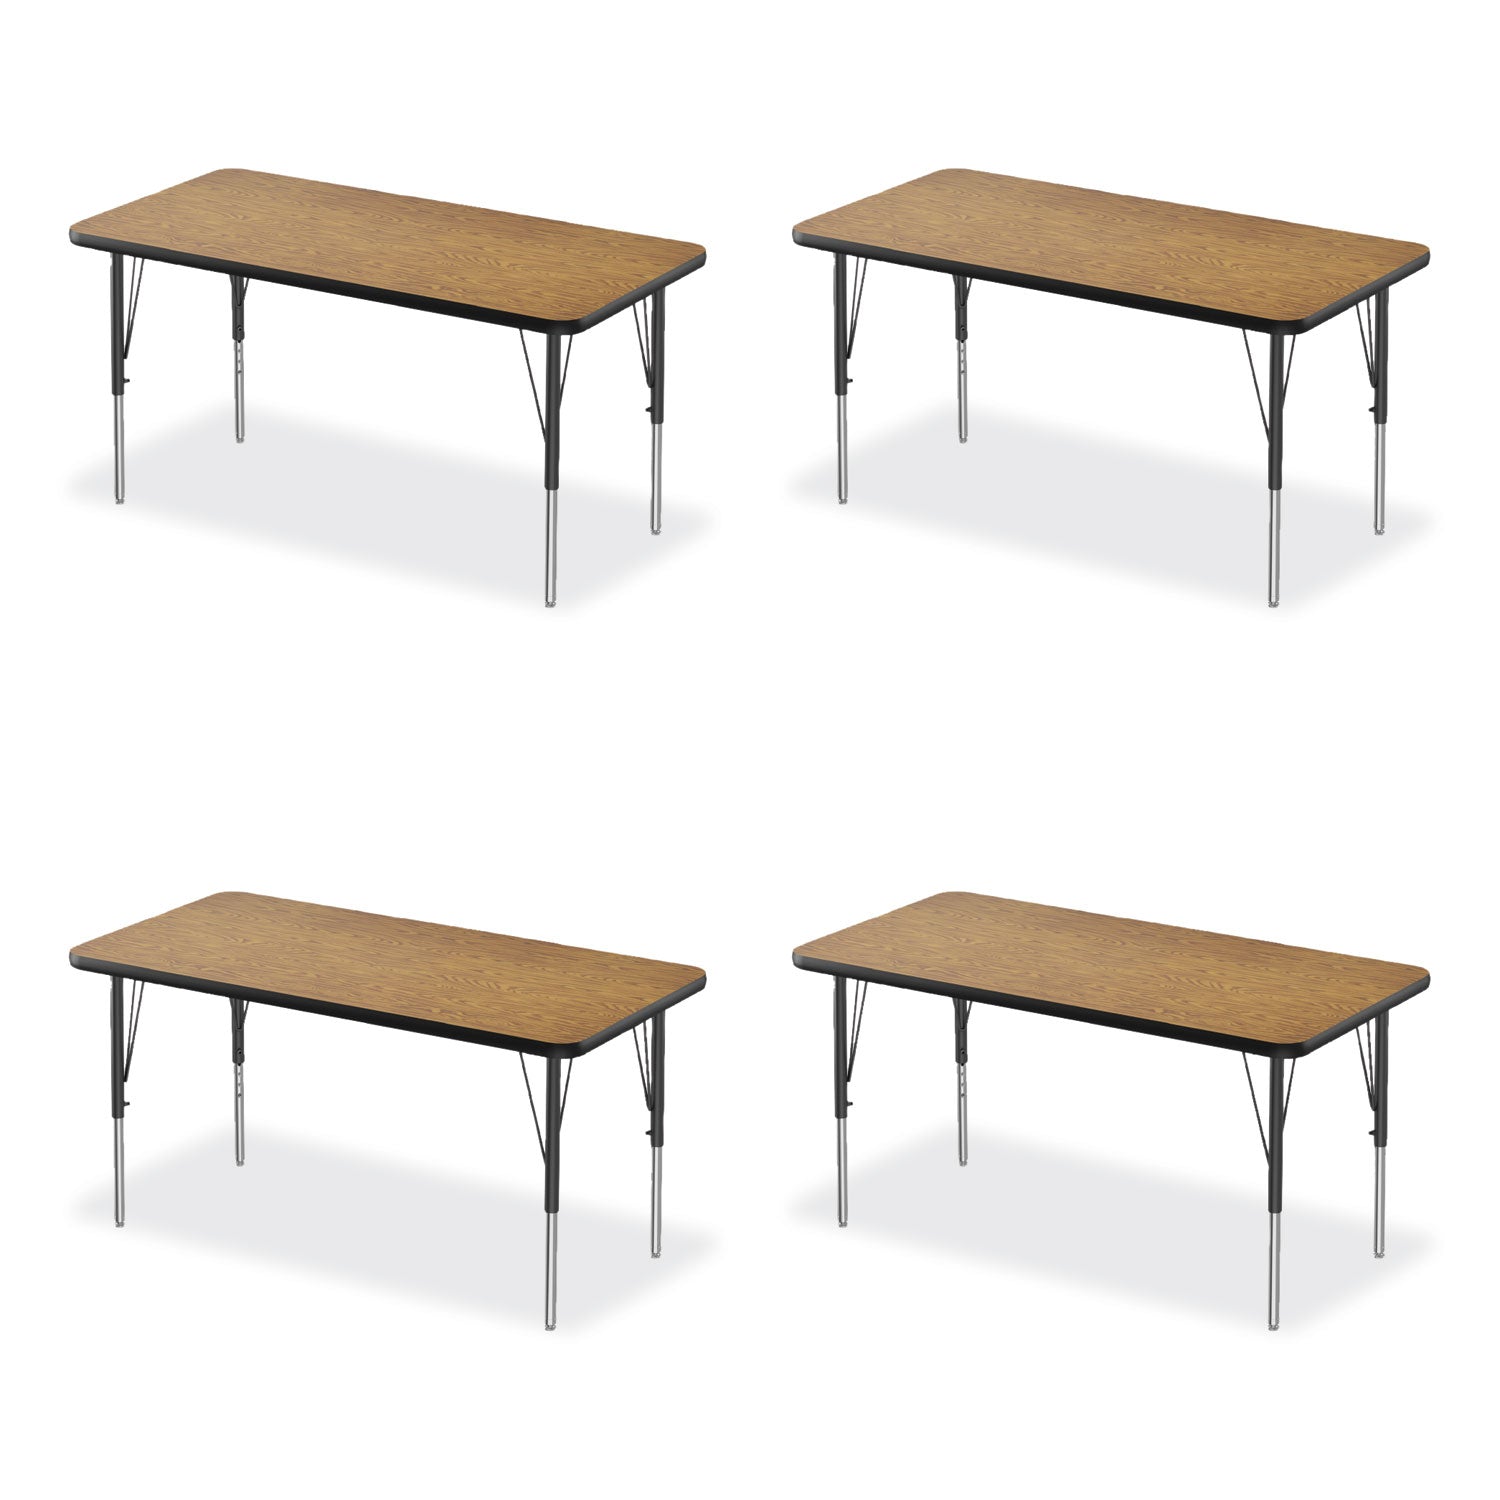 adjustable-activity-table-rectangular-48-x-24-x-19-to-29-med-oak-top-black-legs-4-pallet-ships-in-4-6-business-days_crl2448tf0695k4 - 1